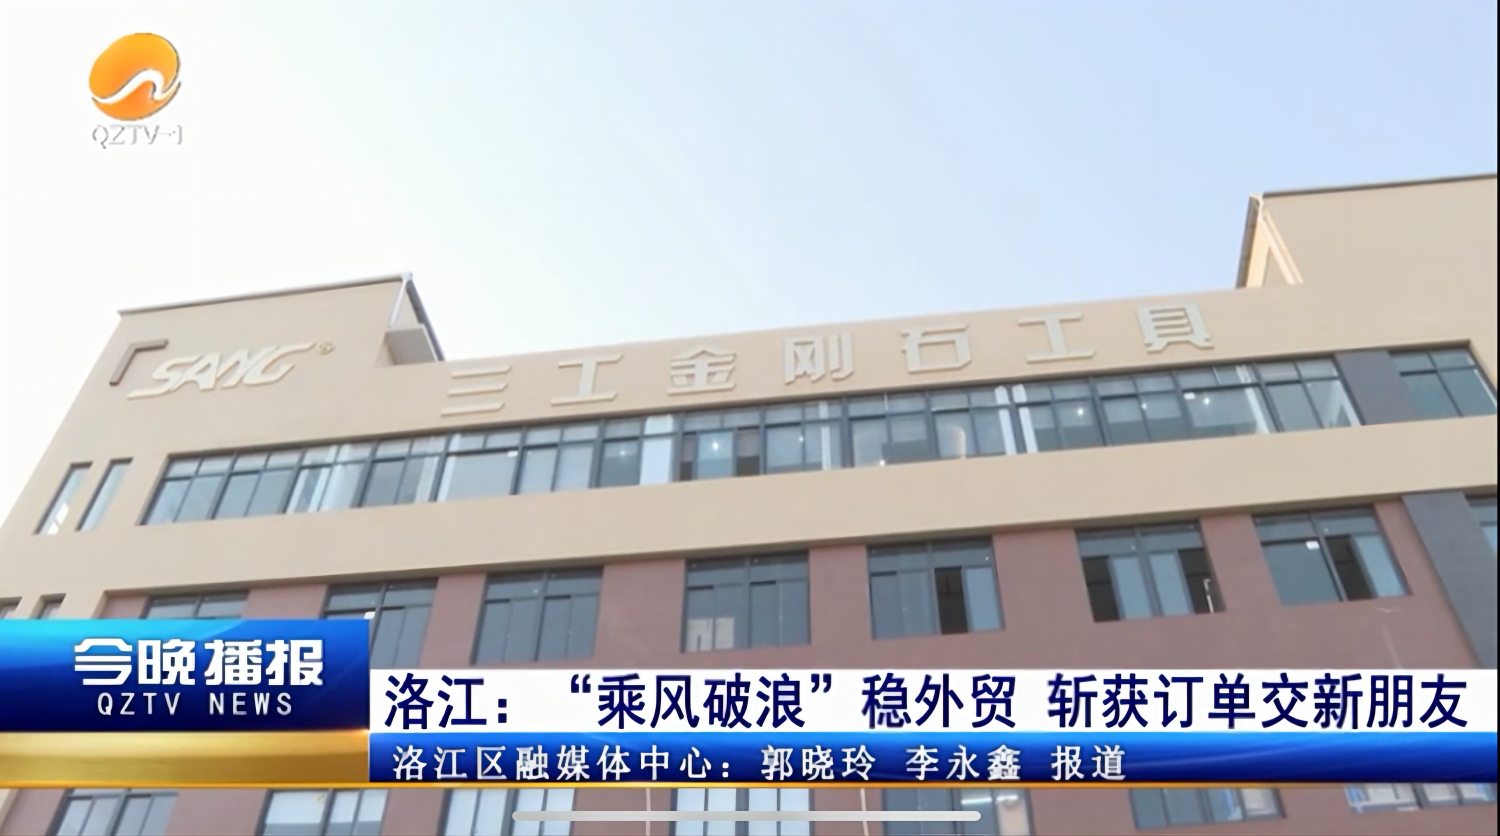 О Quanzhou Sang Diamond Tools сообщили People's Daily и QZTV